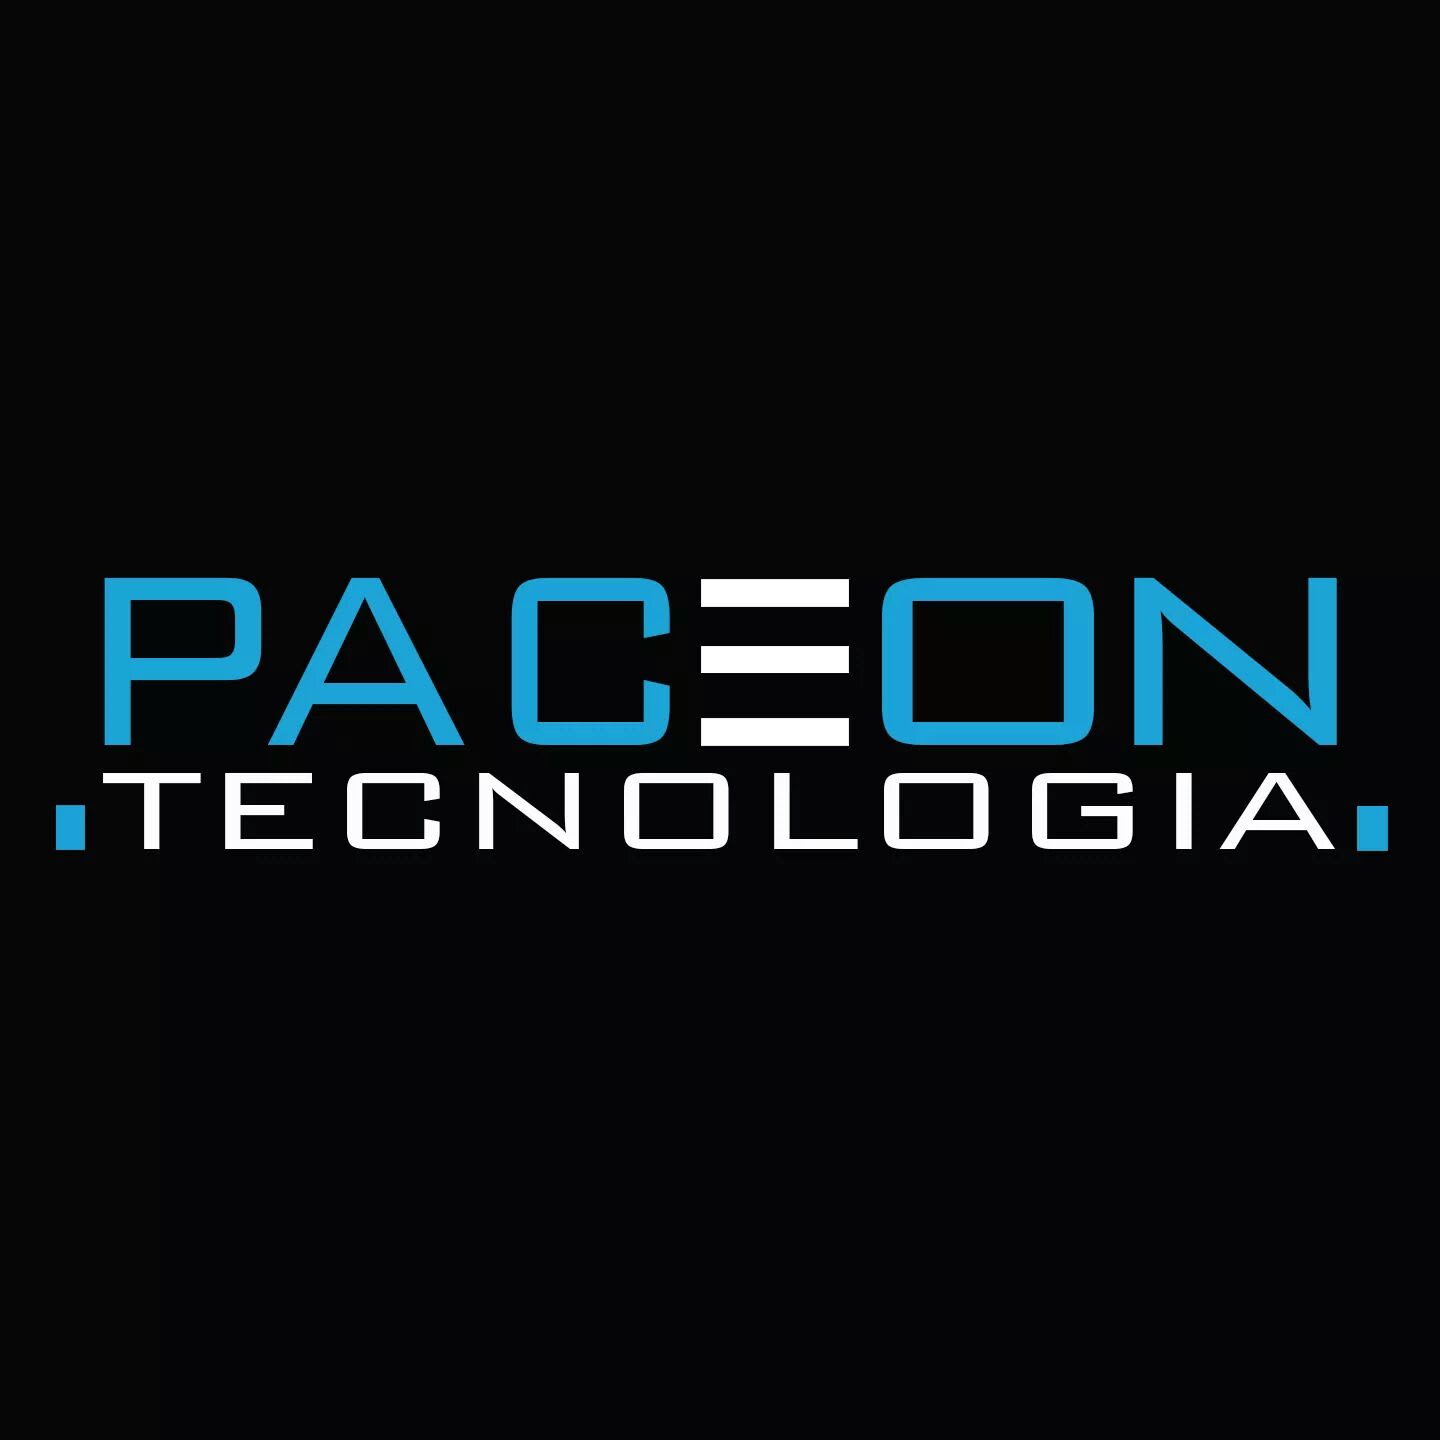 Paceon Tecnologia